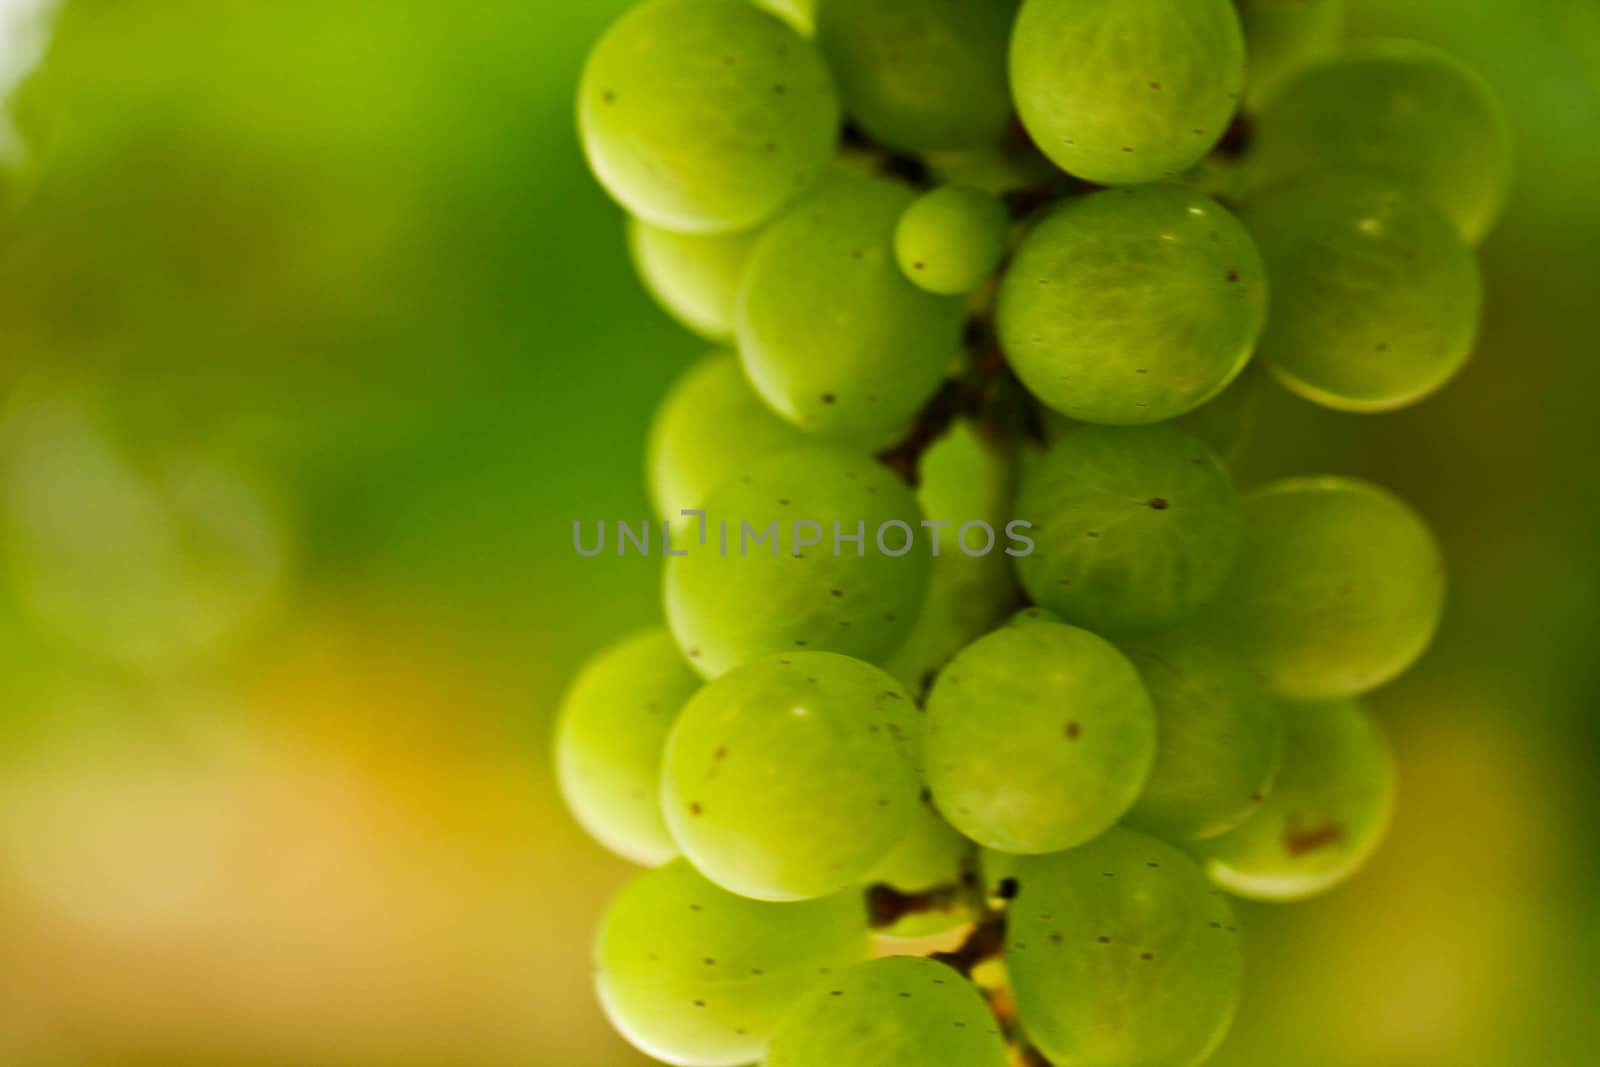 Bunch of green grapes close up shot